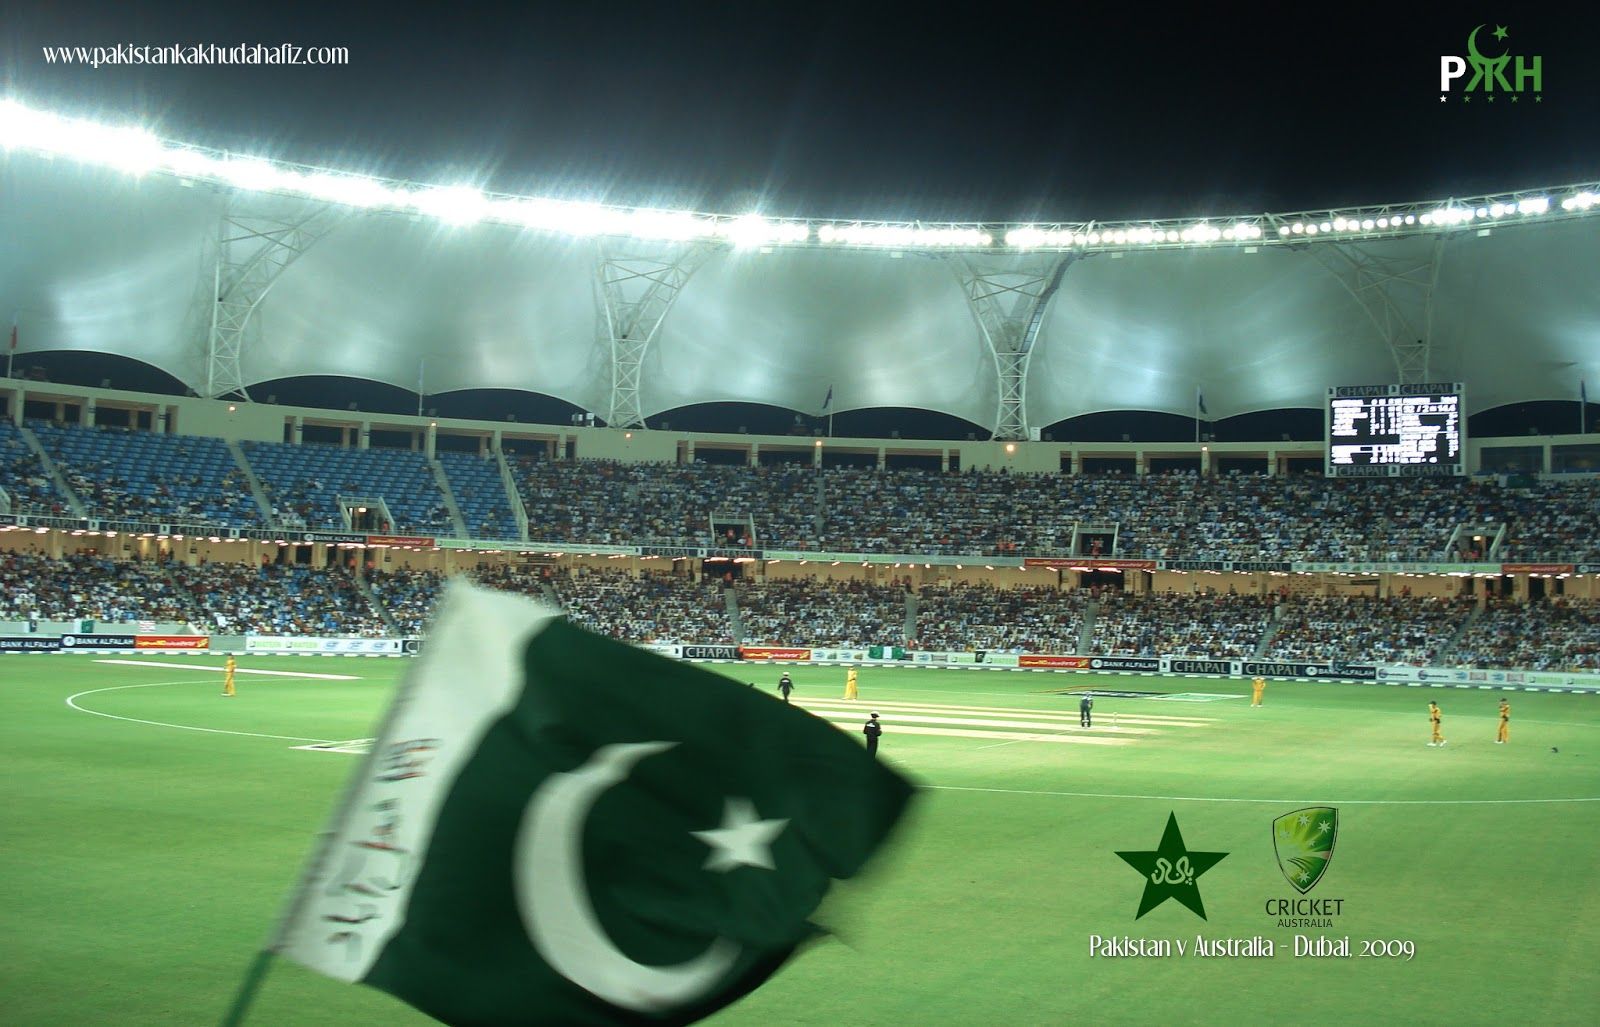 All Wallpaper. Wallpaper 2012: Pakistan cricket team wallpaper. Pakistan cricket team